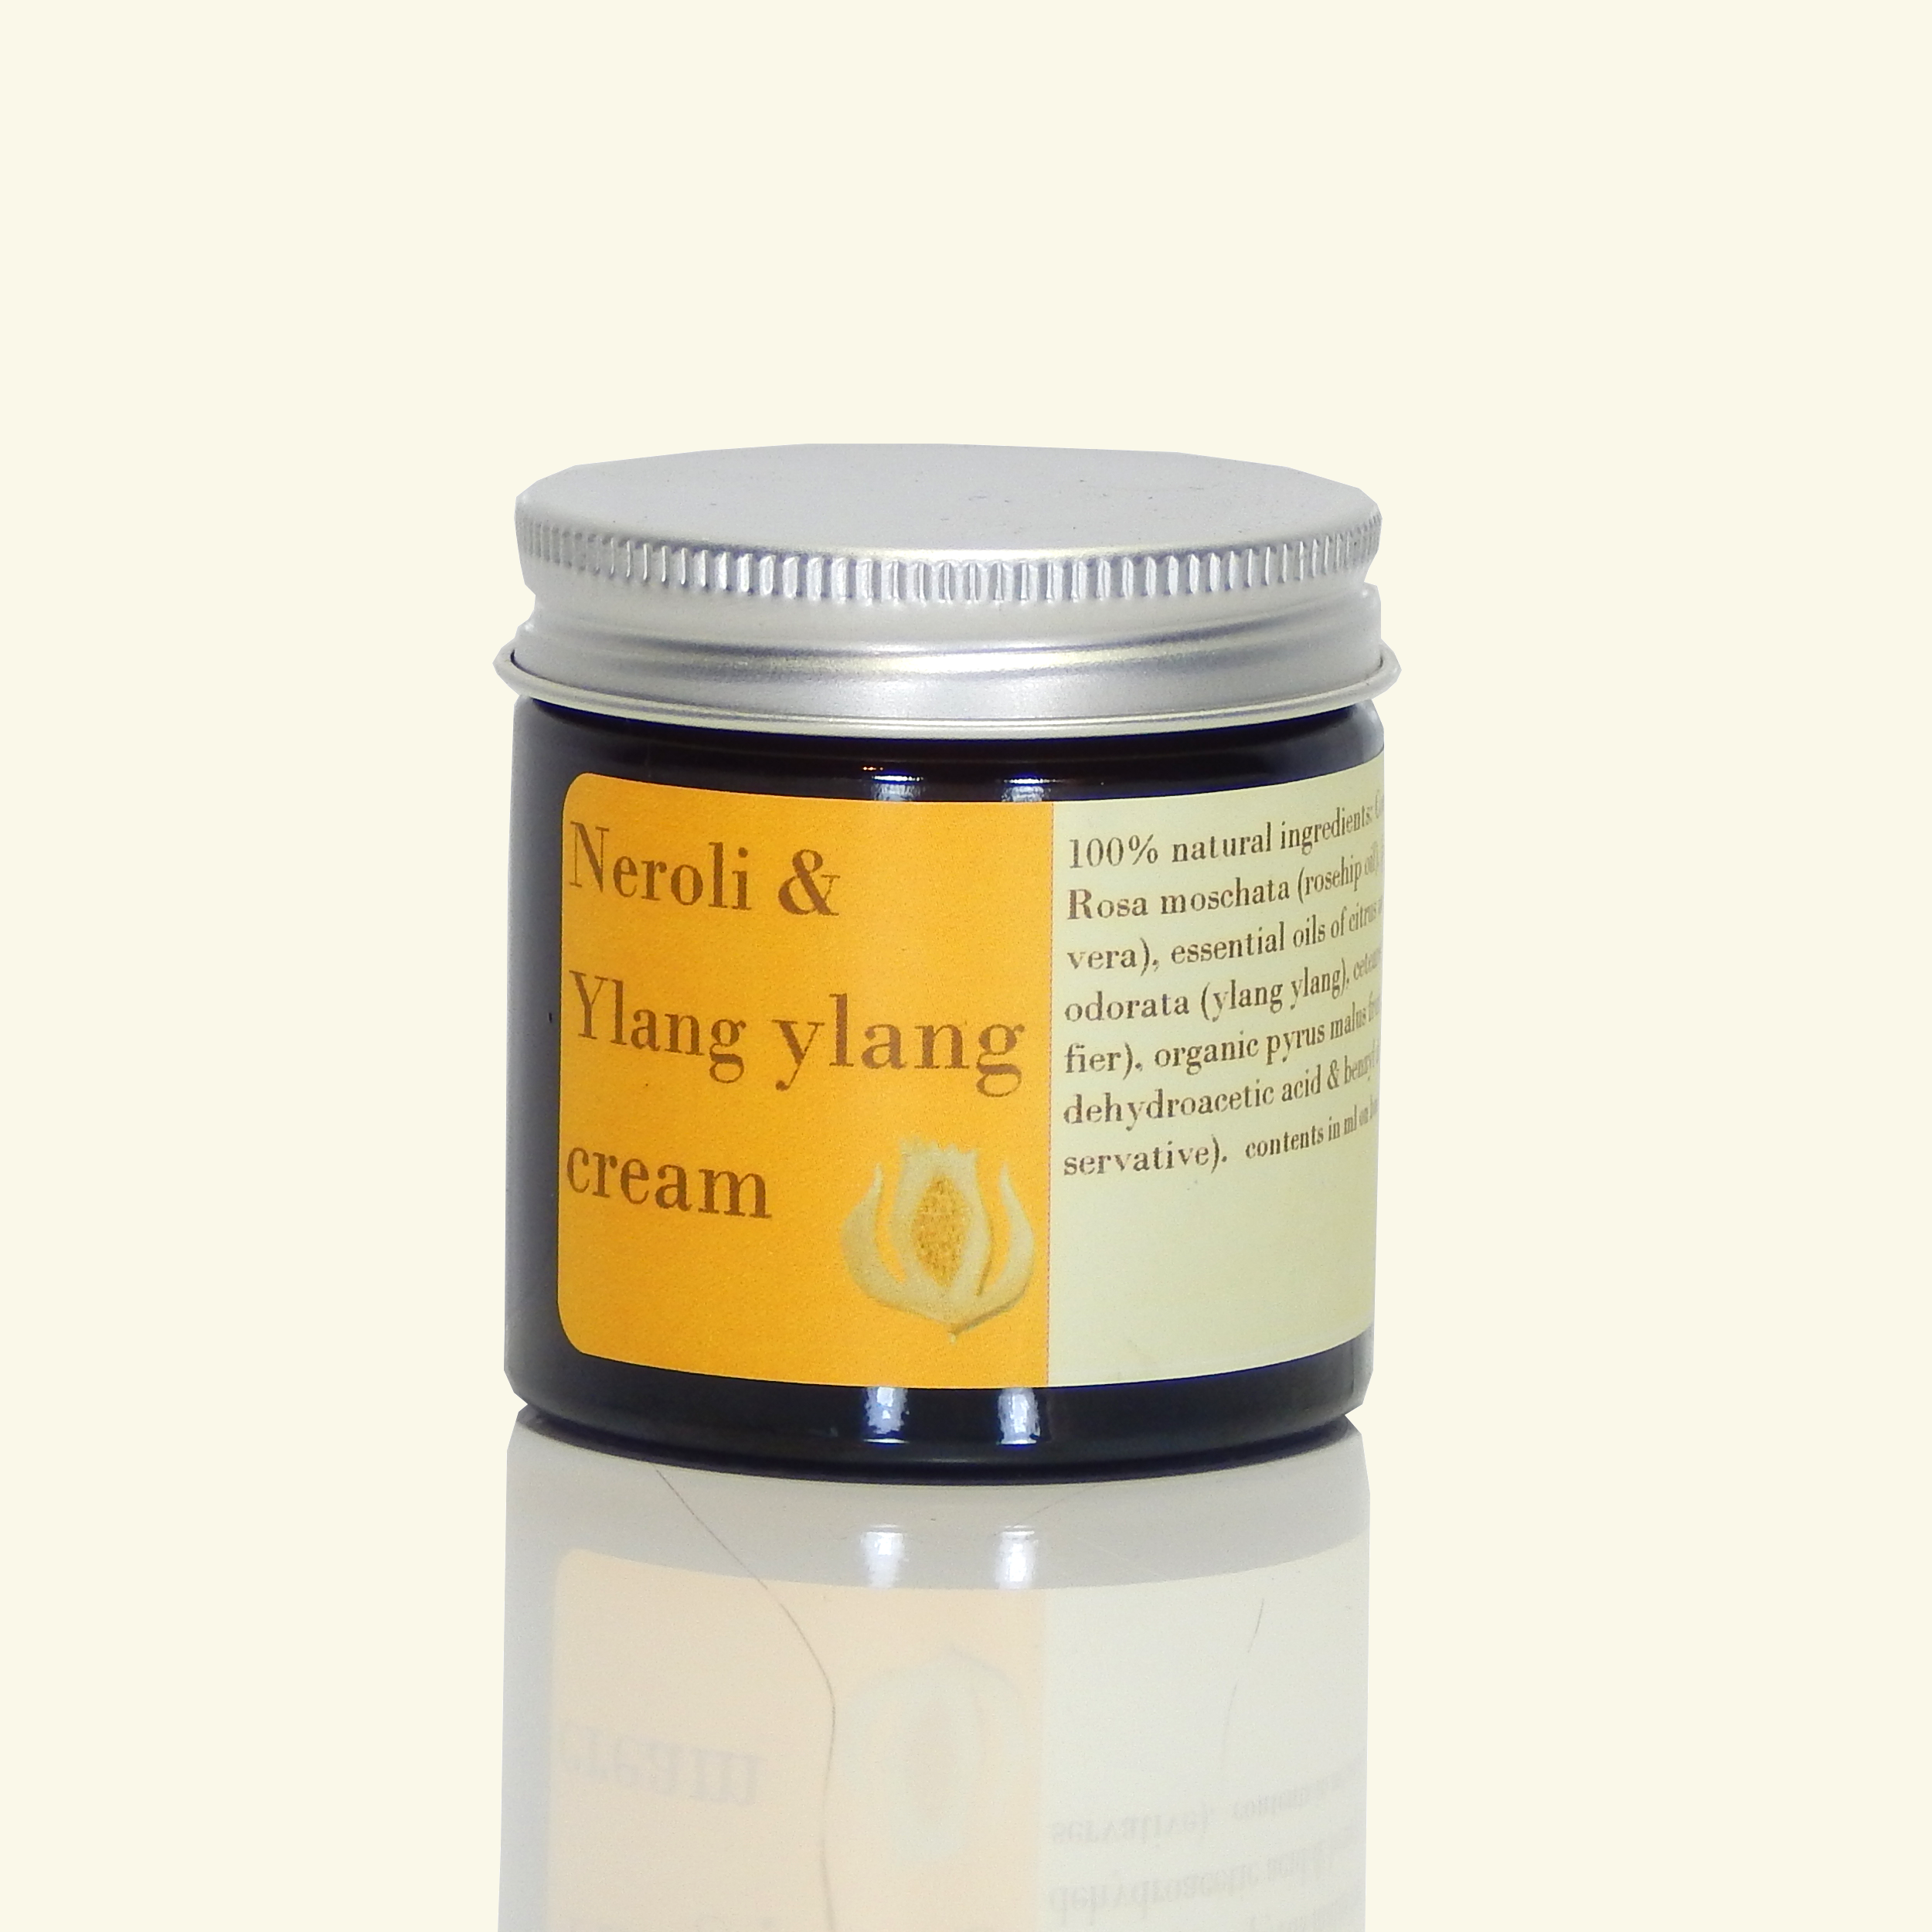 Neroli & Ylang Ylang Cream